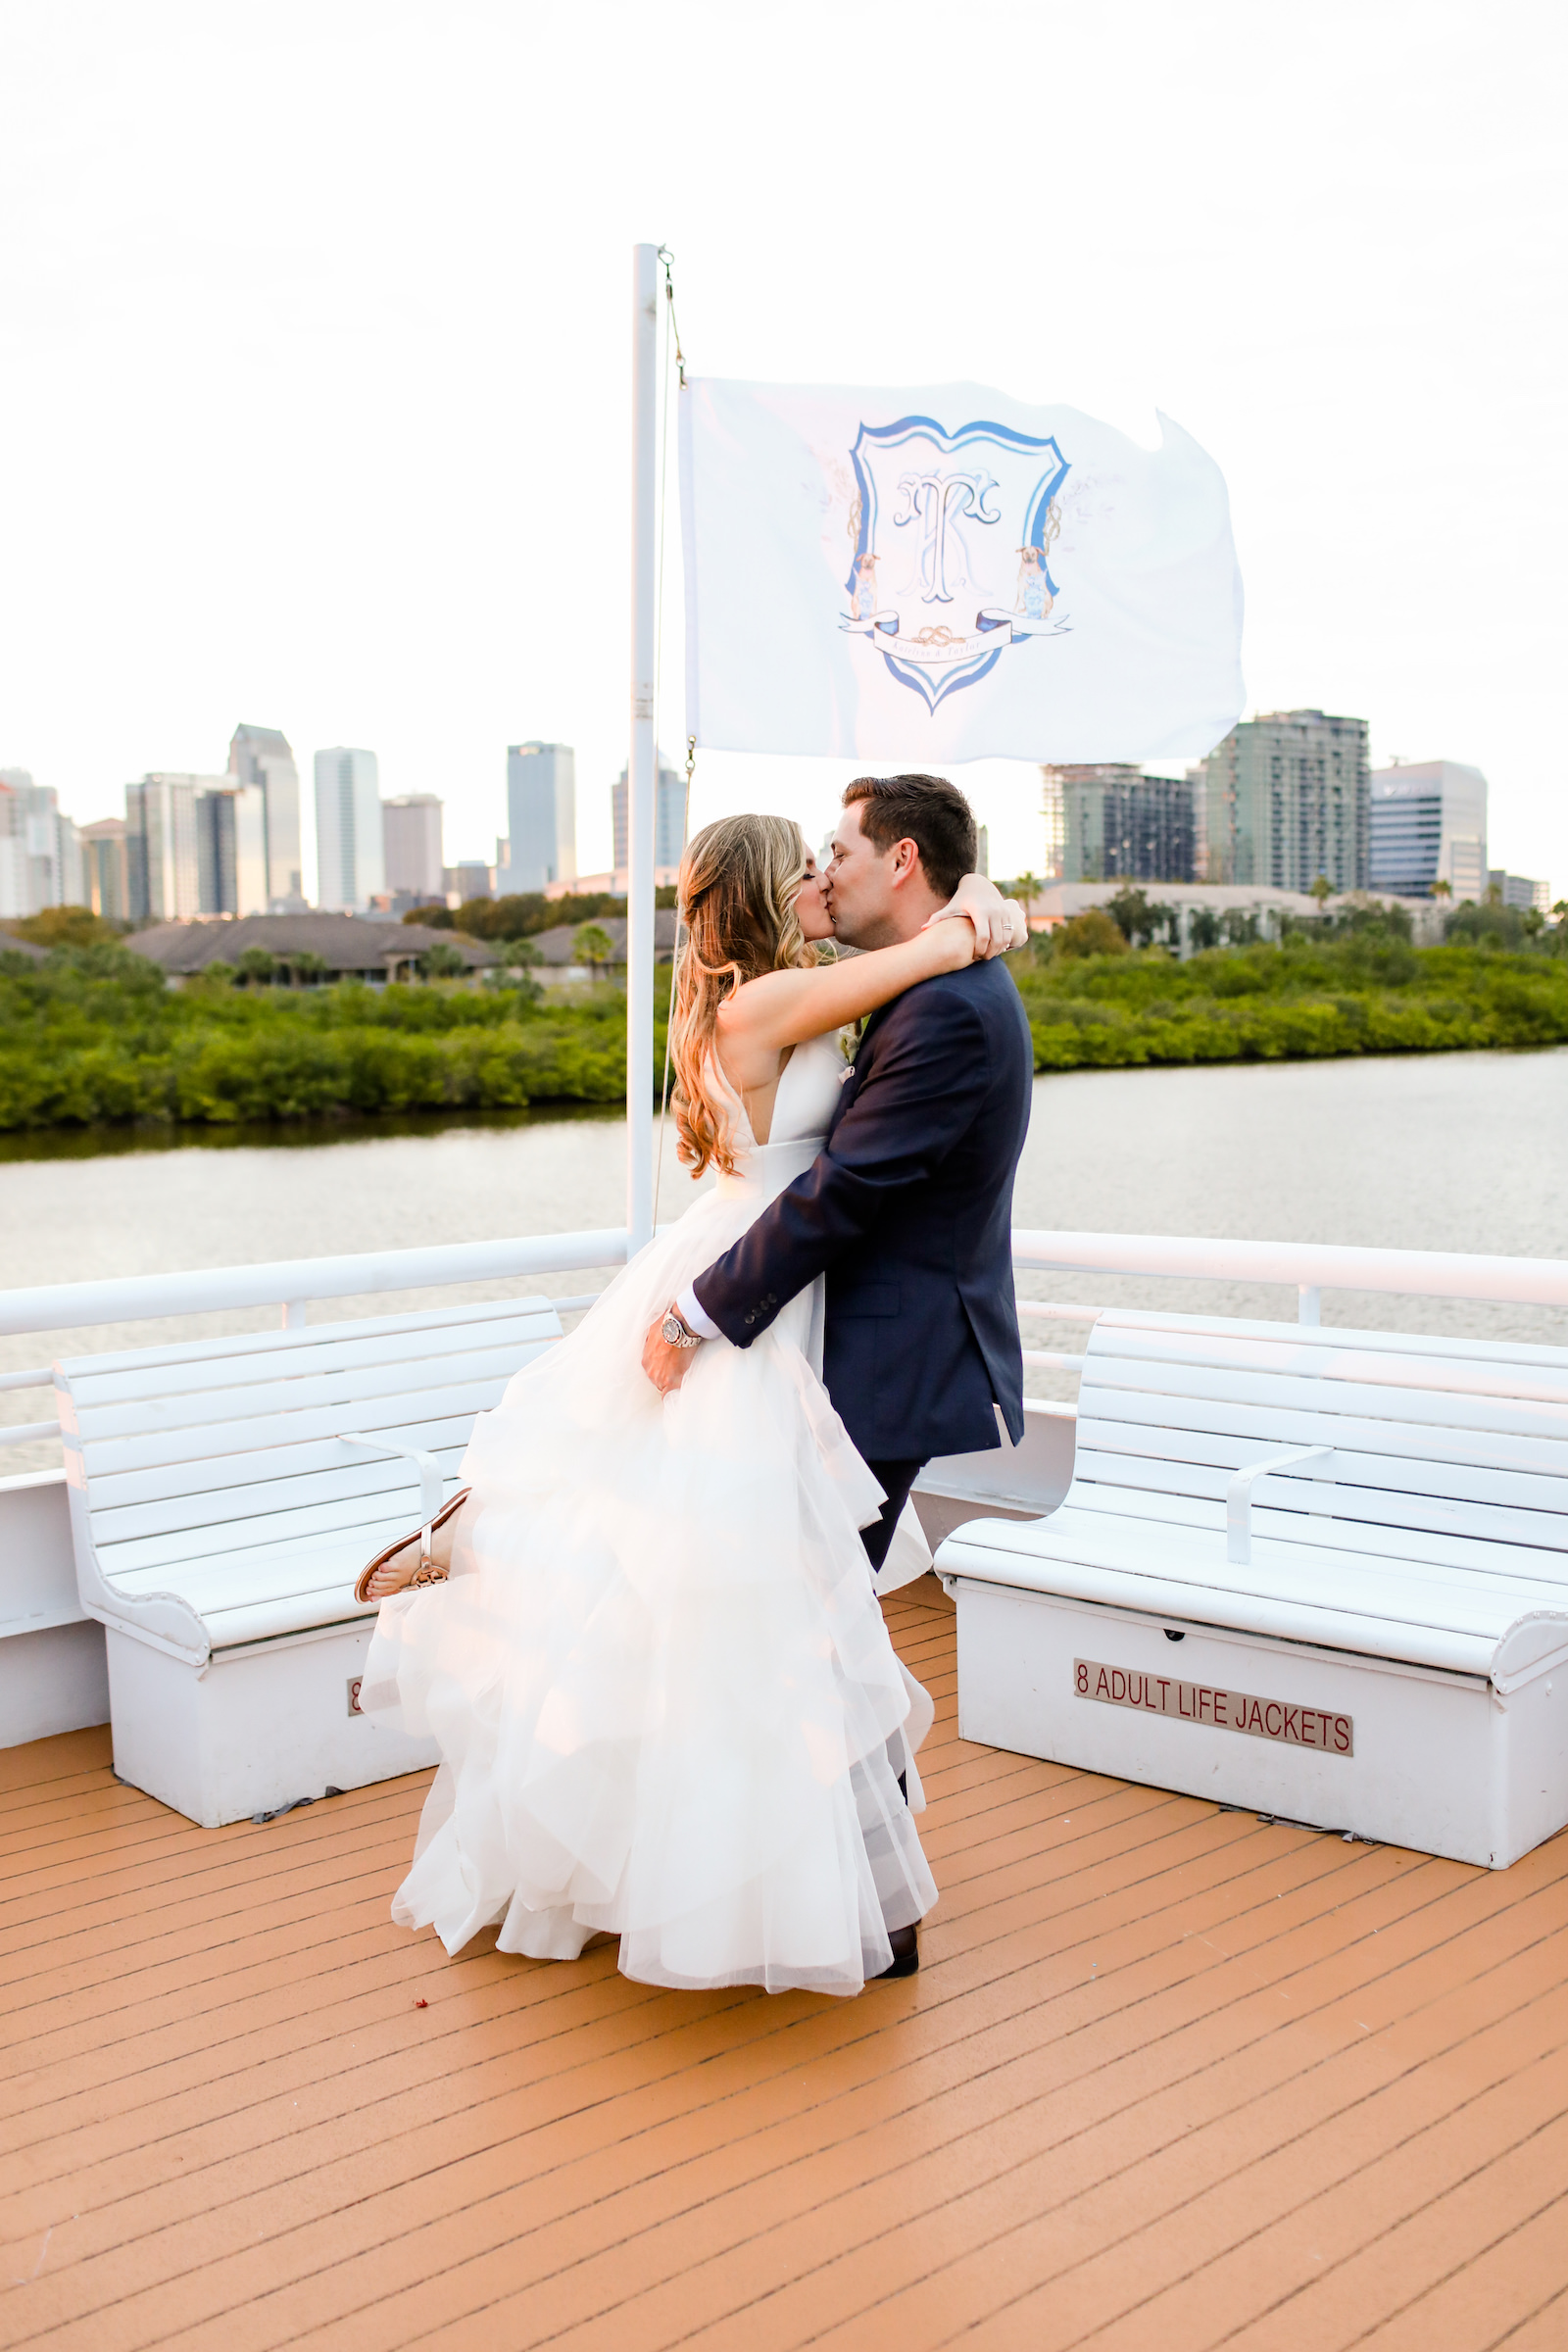 Romantic Blue Coastal Chic Tampa Wedding, Bride Being Twirled by Groom | Tampa Bay Wedding Venue Yacht StarShip | Wedding Photographer Lifelong Photography Studio